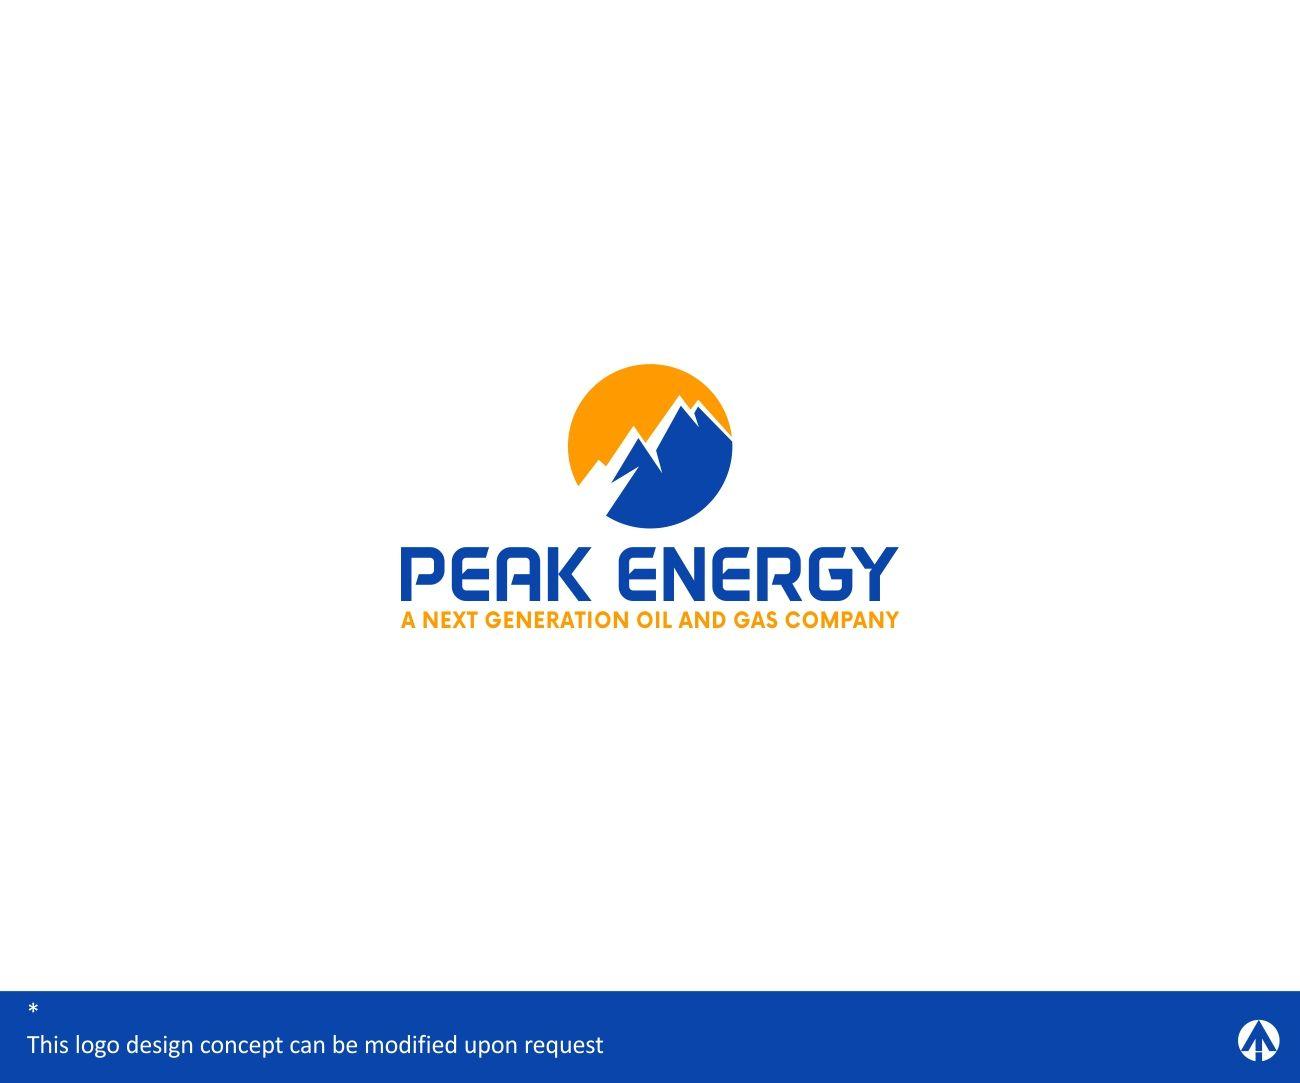 Energy Company Logo - Modern, Professional, Gas Company Logo Design for PEAK ENERGY ...